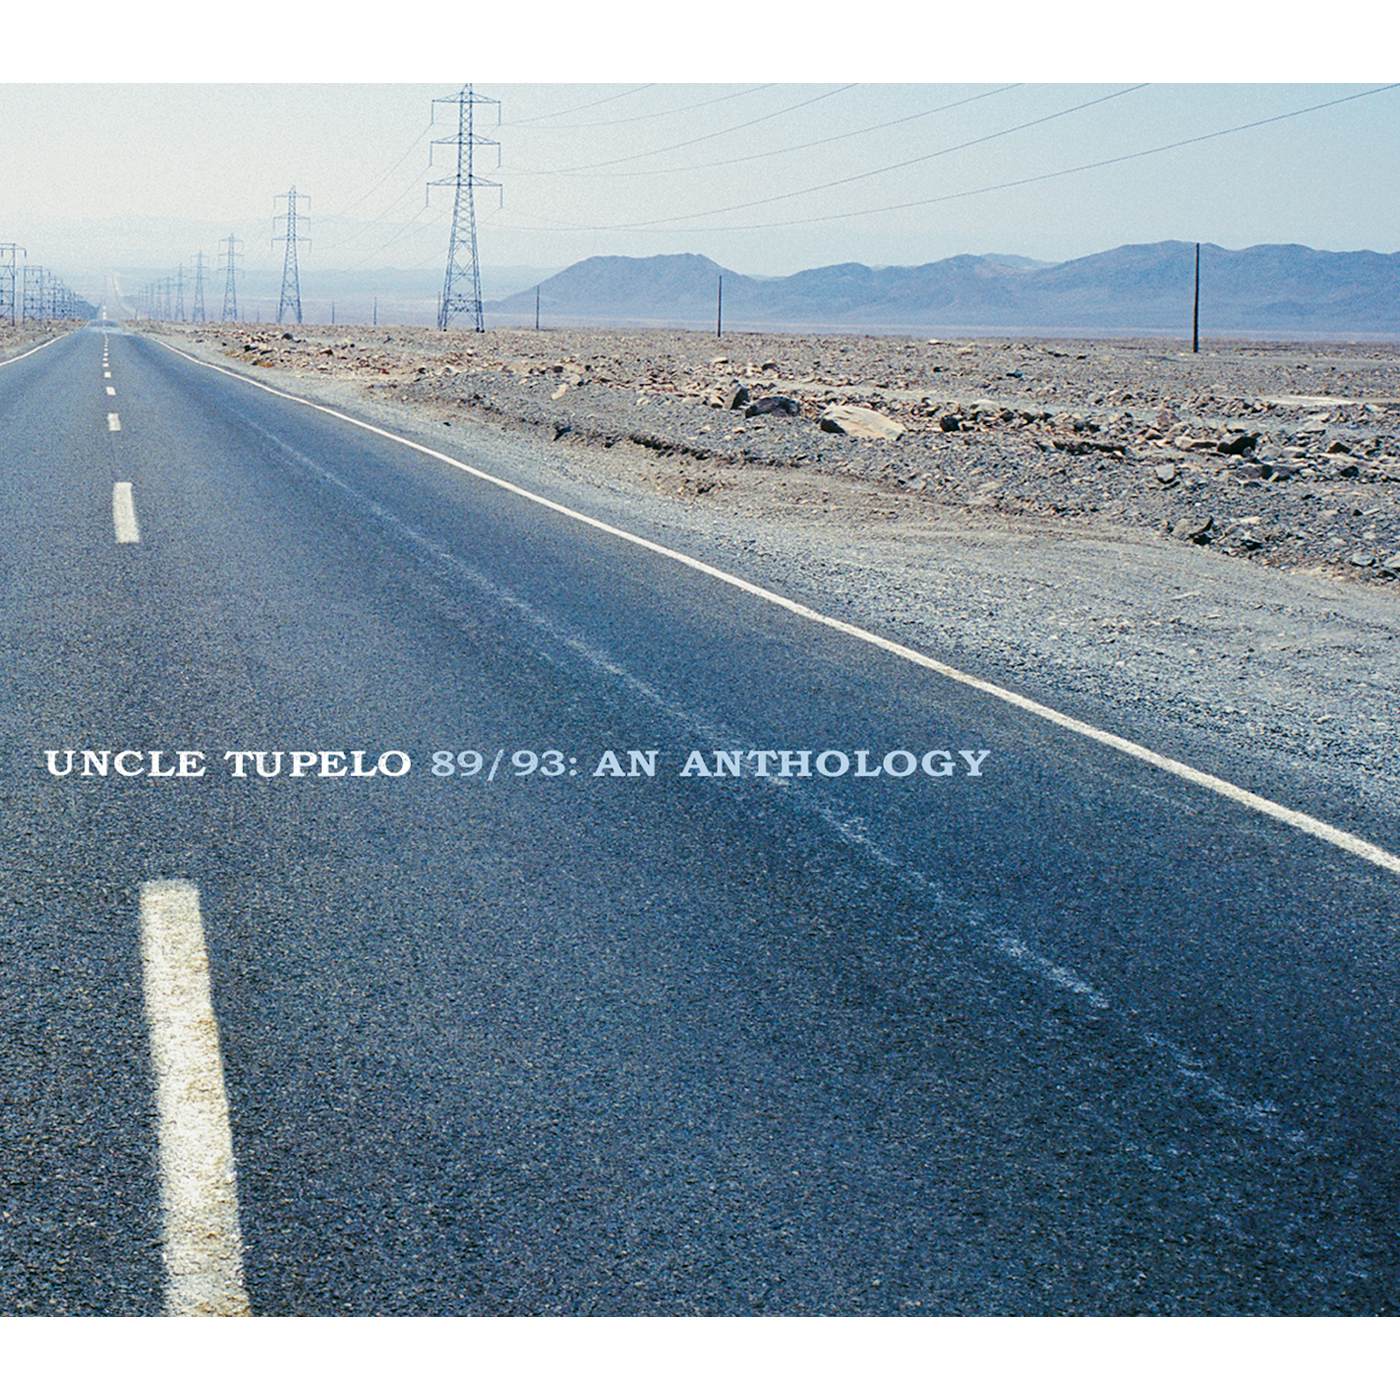 Uncle Tupelo 83/93: AN ANTHOLOGY CD